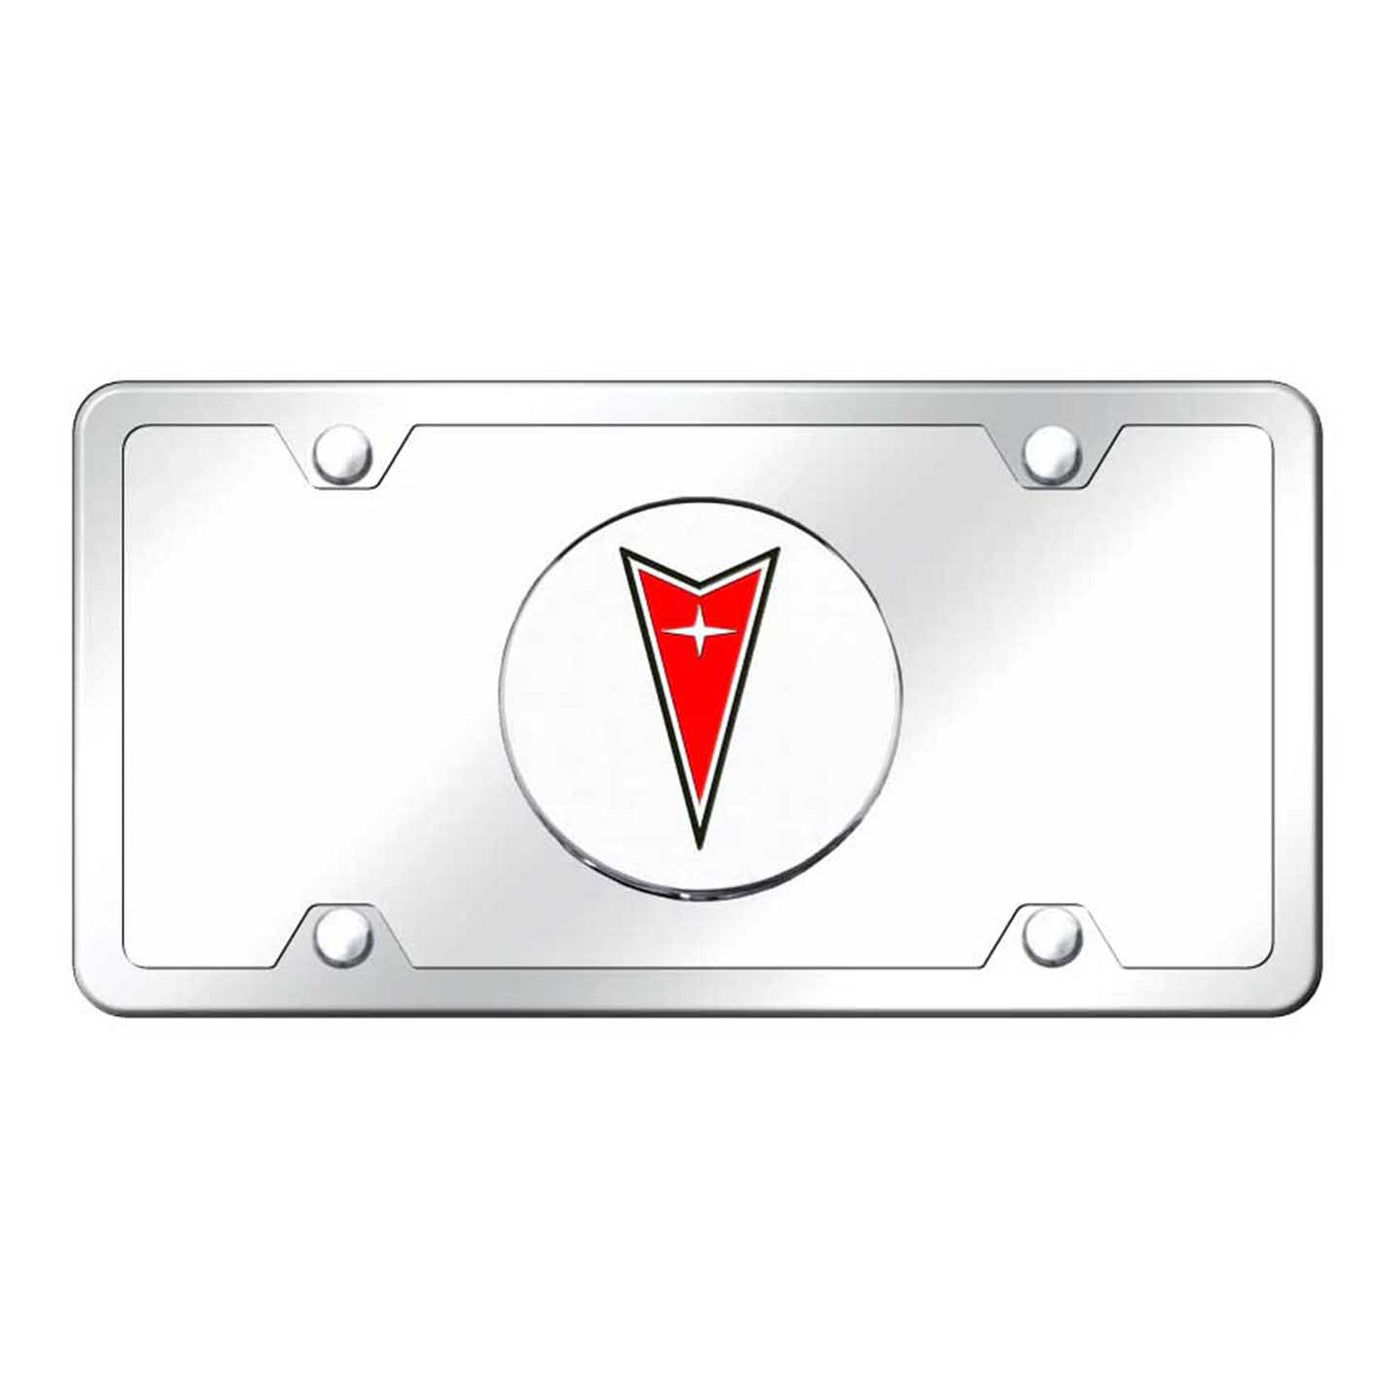 Pontiac Plate Kit - Chrome on Mirrored